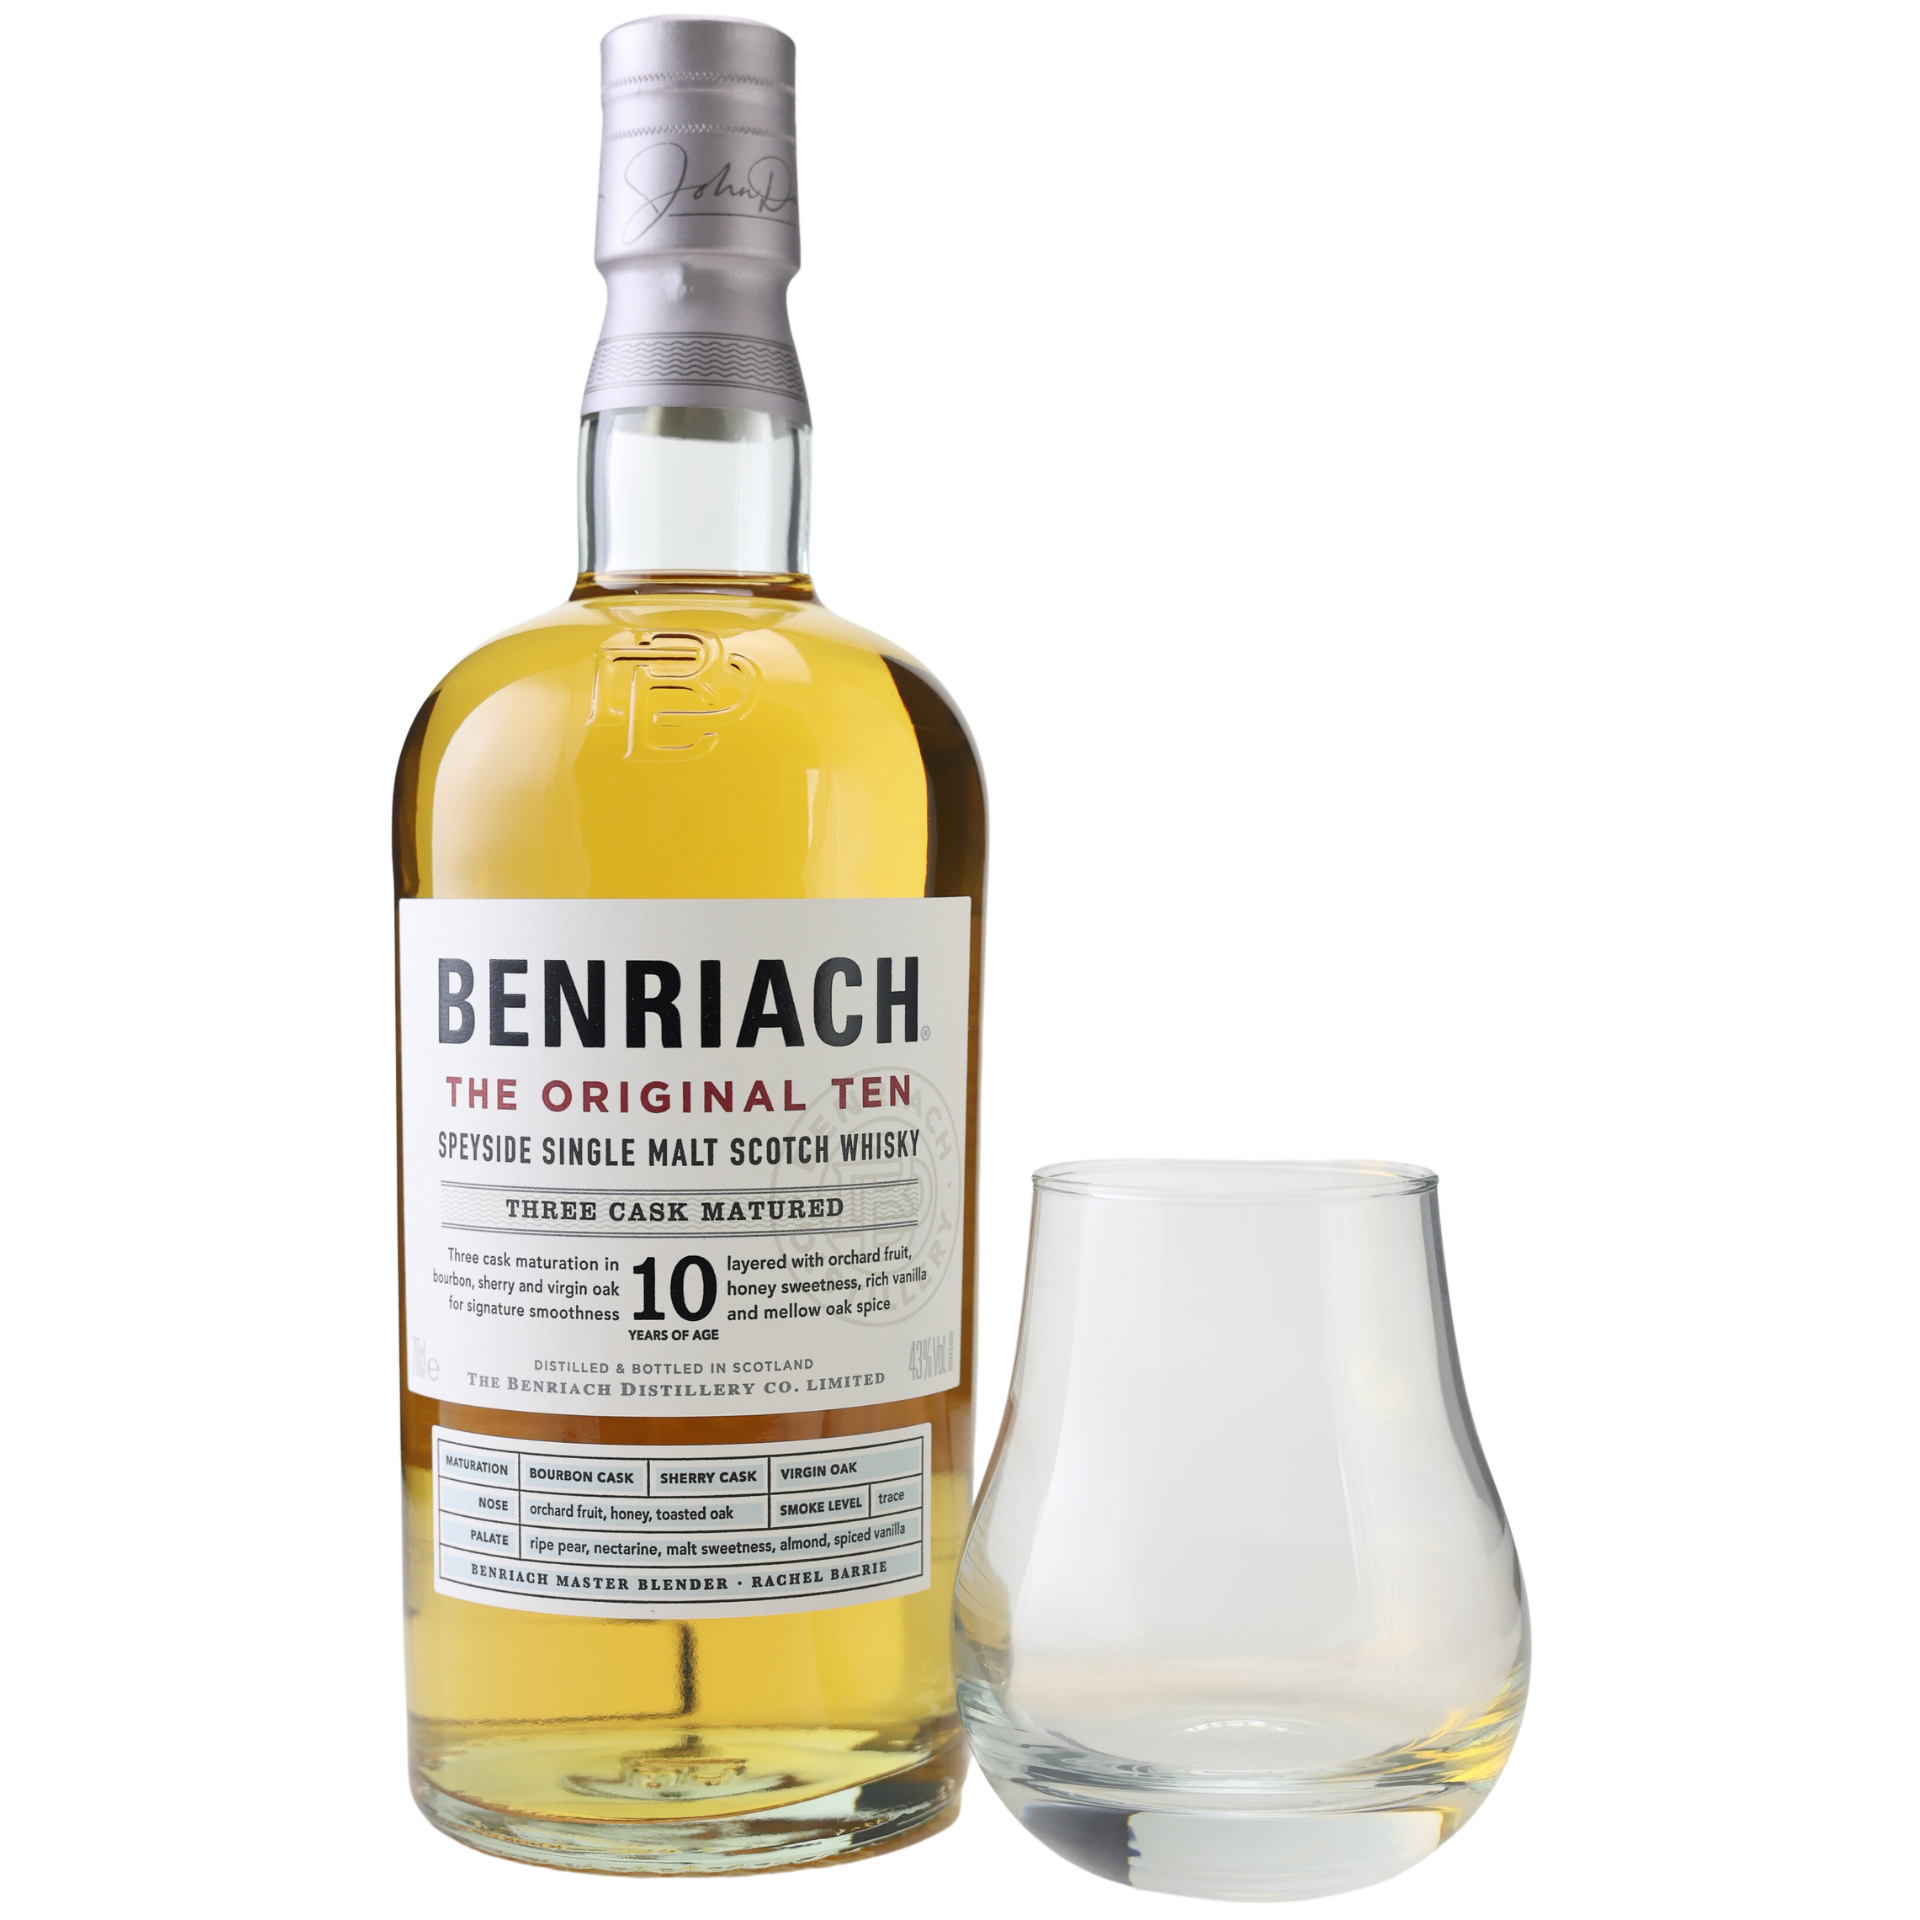 BenRiach "The Original Ten" Speyside Single Malt Scotch Whisky 43% 0,7l + Tumbler